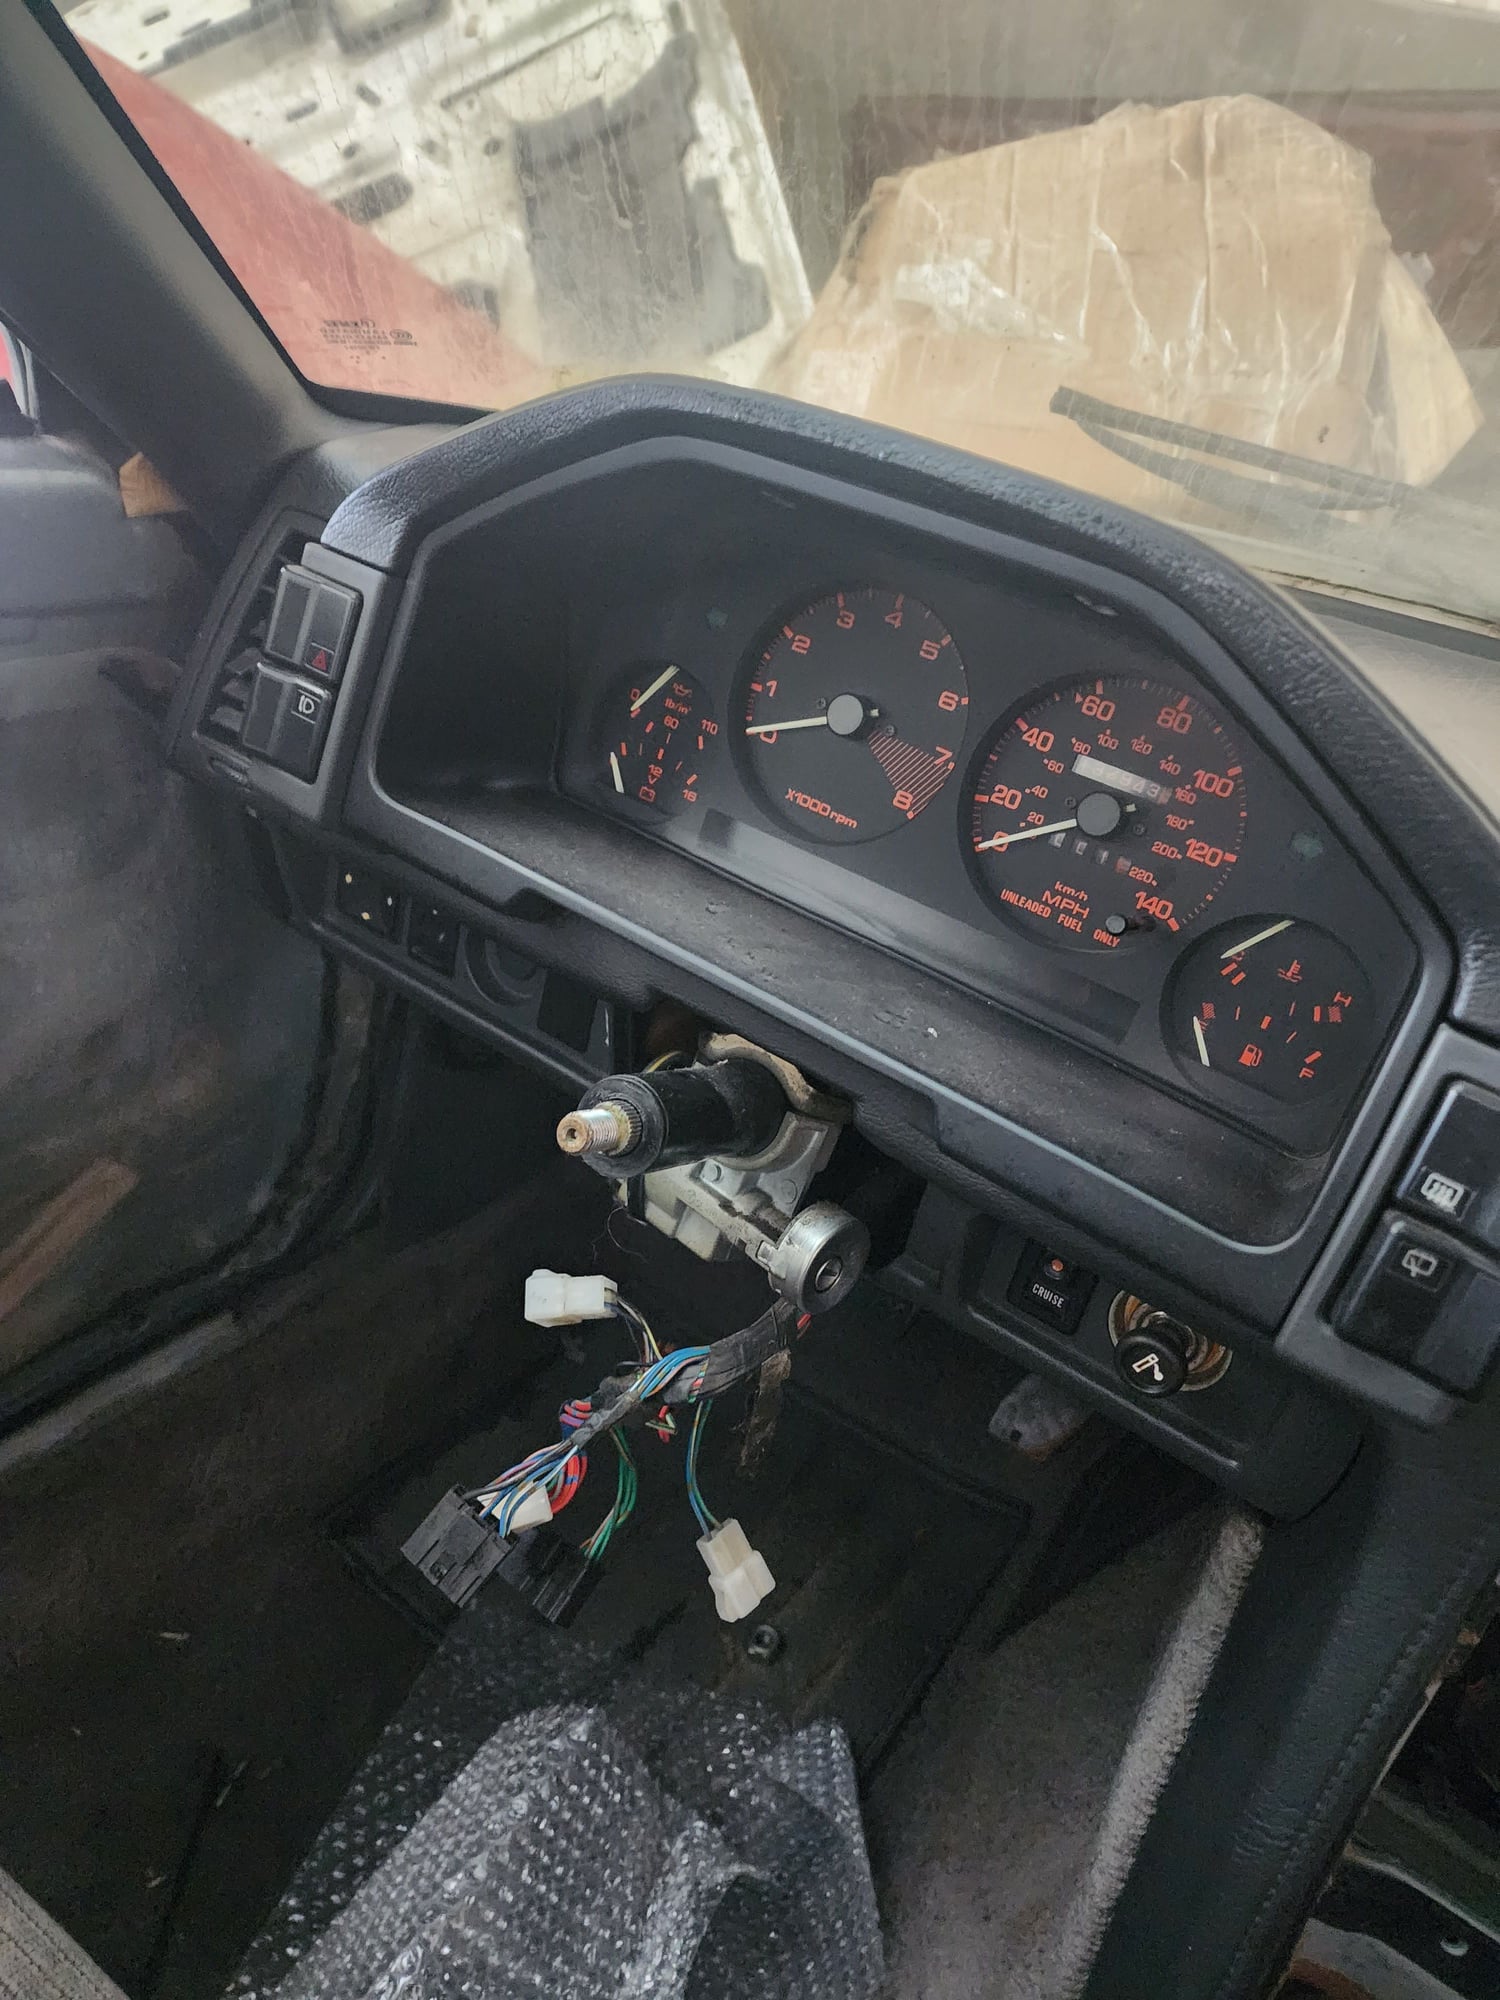 Drivetrain - Fb parts ,GSL-SE parts - Used - 1983 to 1985 Mazda RX-7 - Brigham City, UT 84302, United States